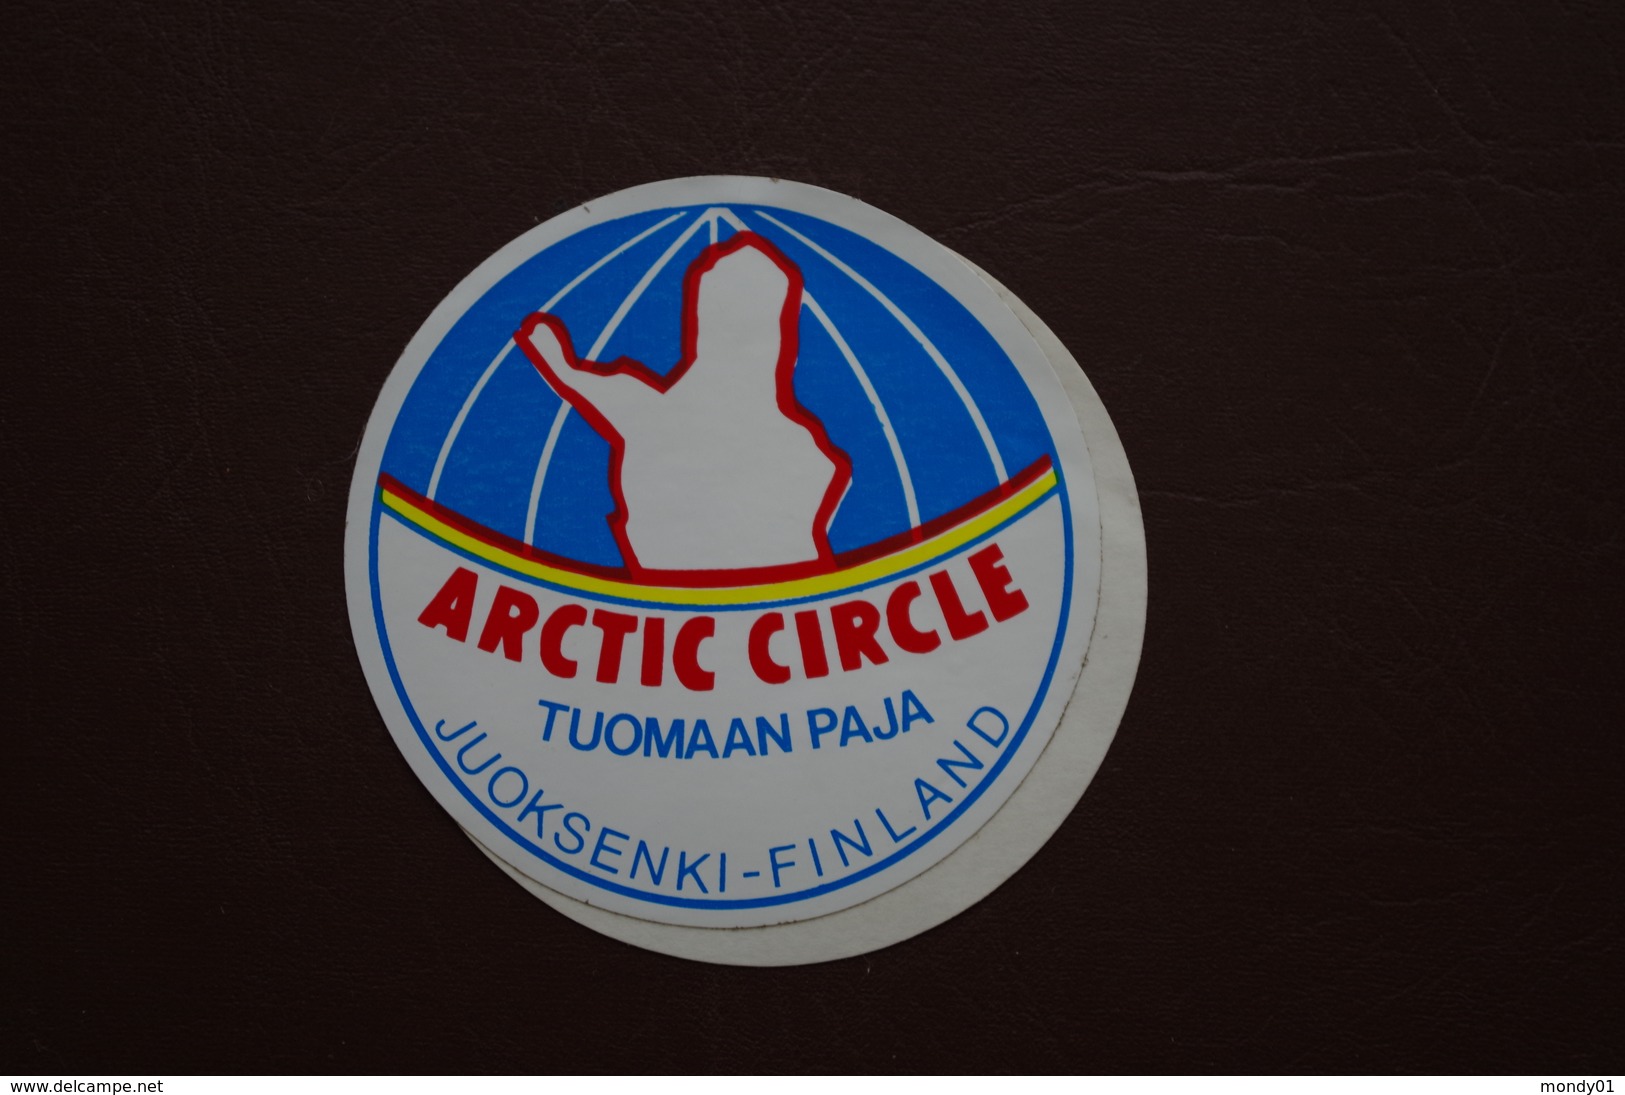 6-177 Autocollant Arctic Circle Cercle Polaire Finlande Juoksenki Tuomaan Paja Mesure D'Arc Meridien - Events & Gedenkfeiern